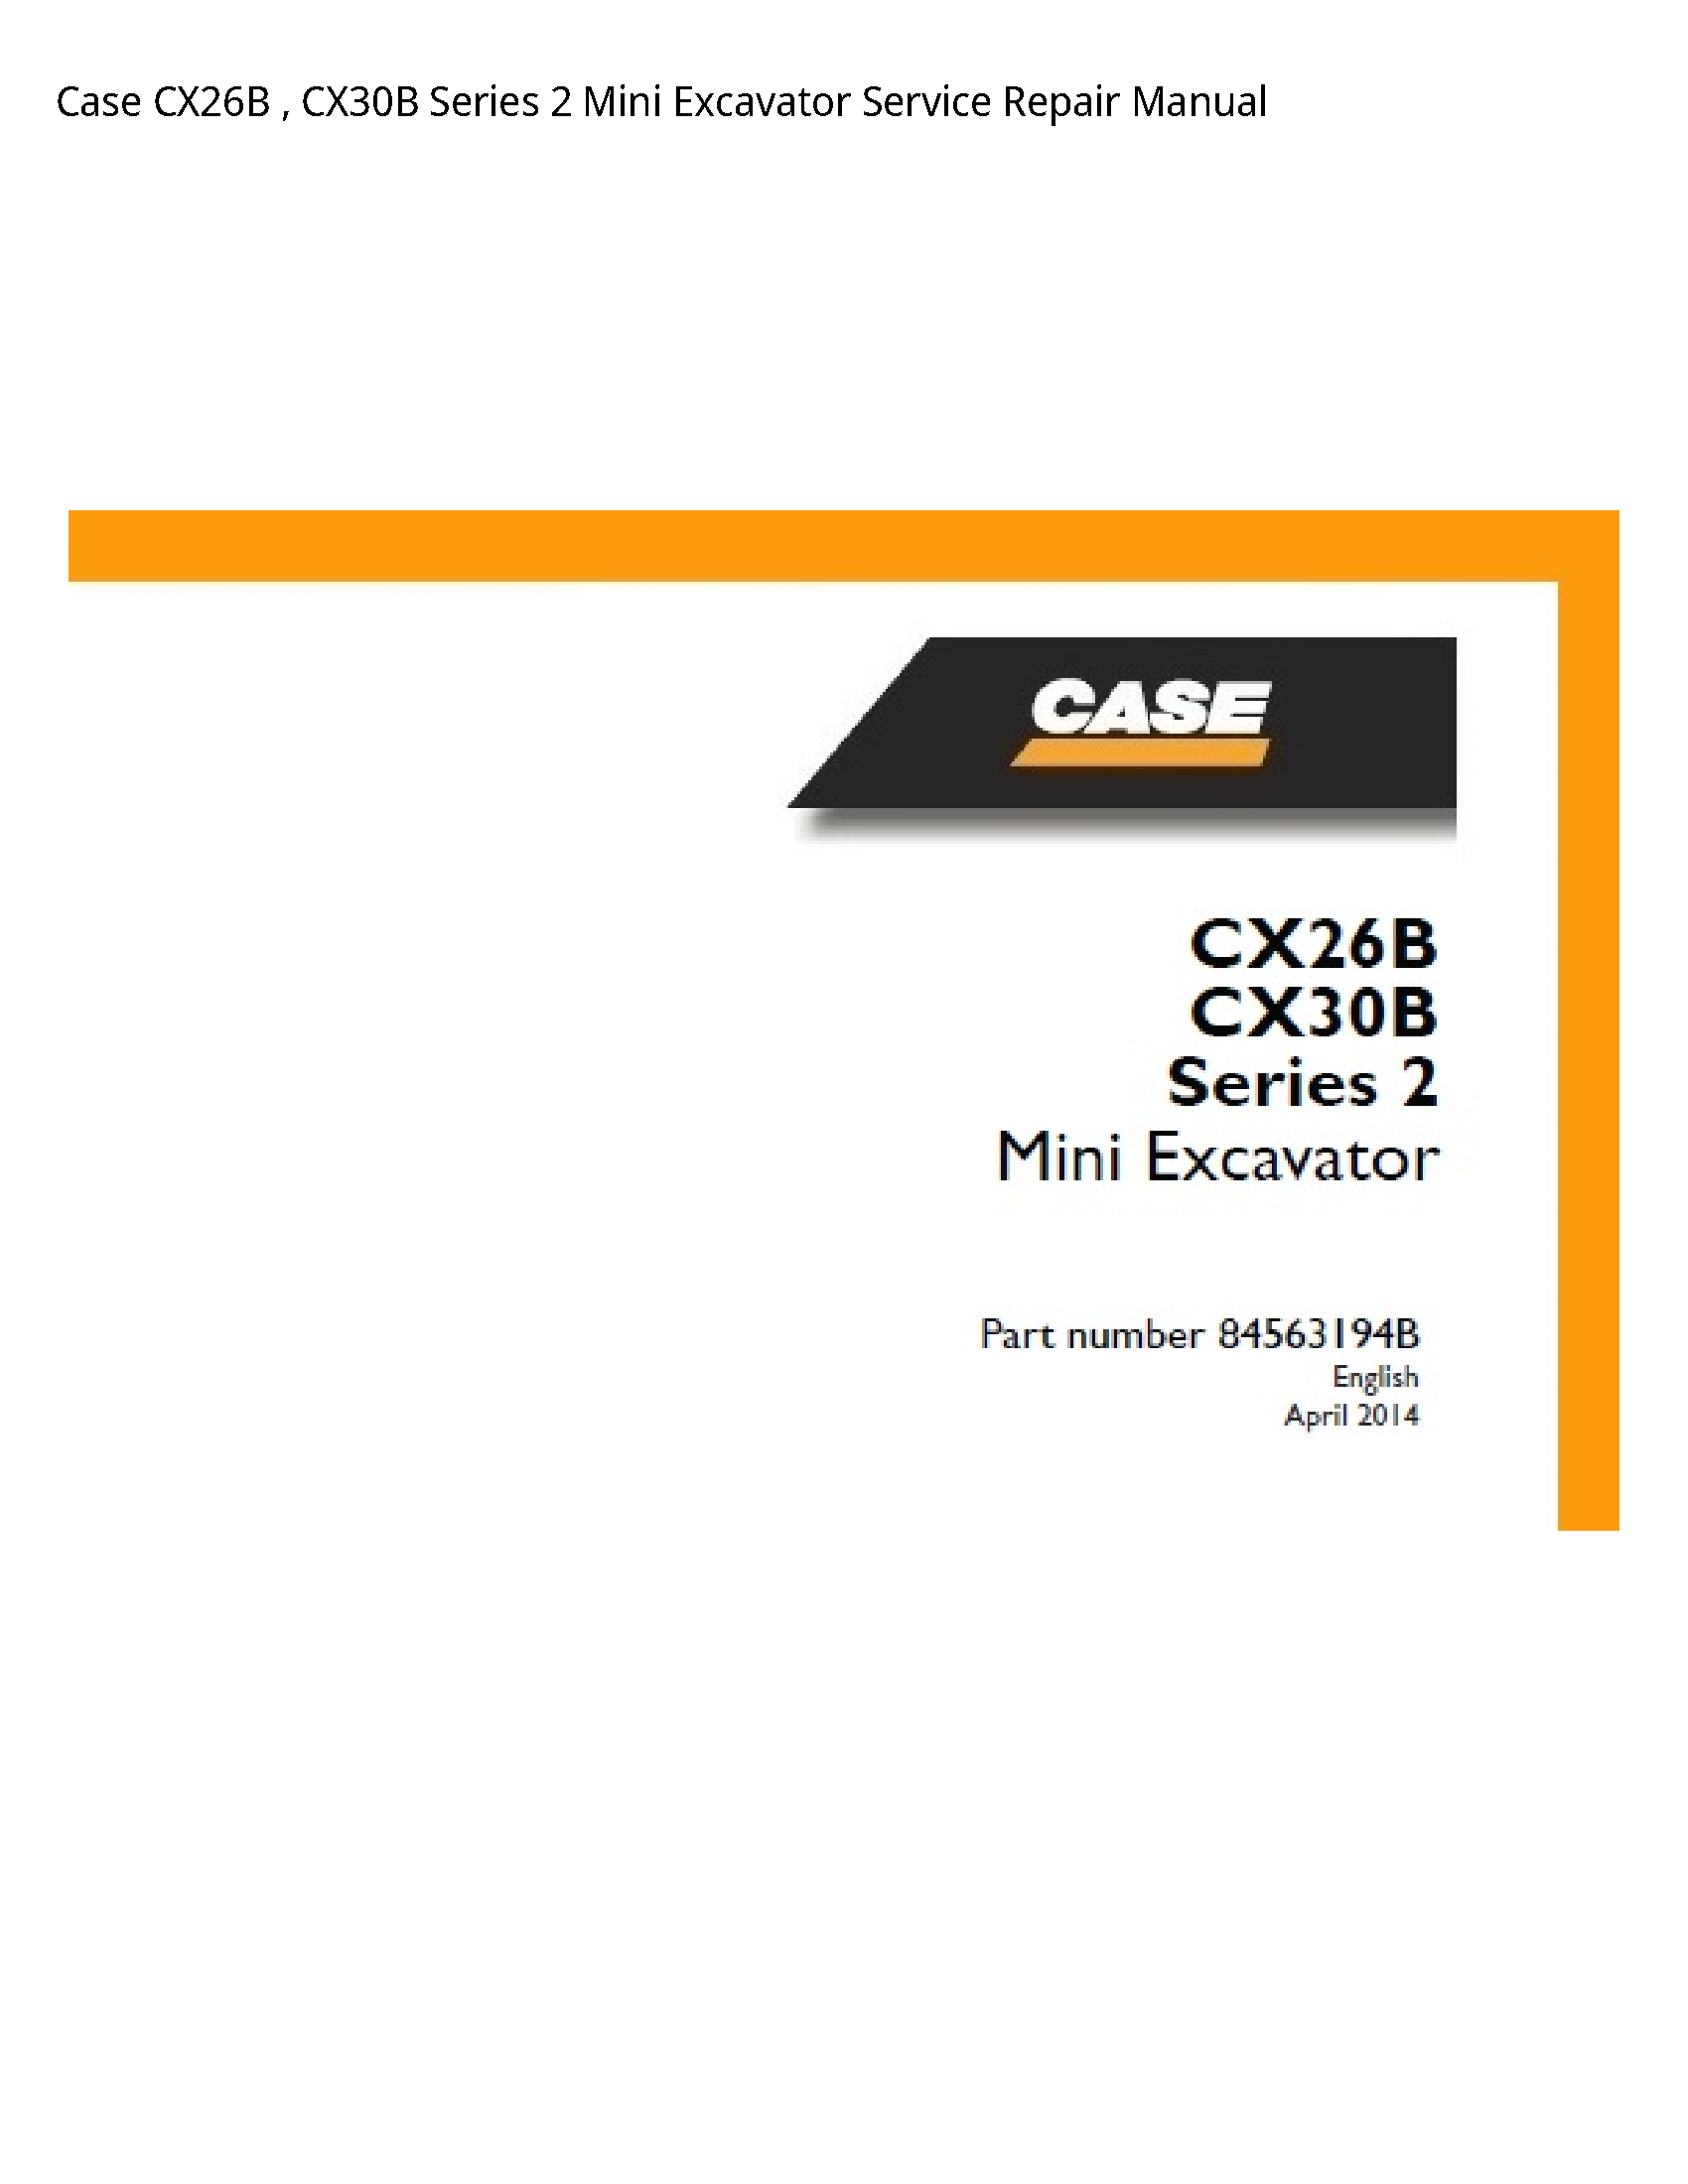 Case/Case IH CX26B Series Mini Excavator manual